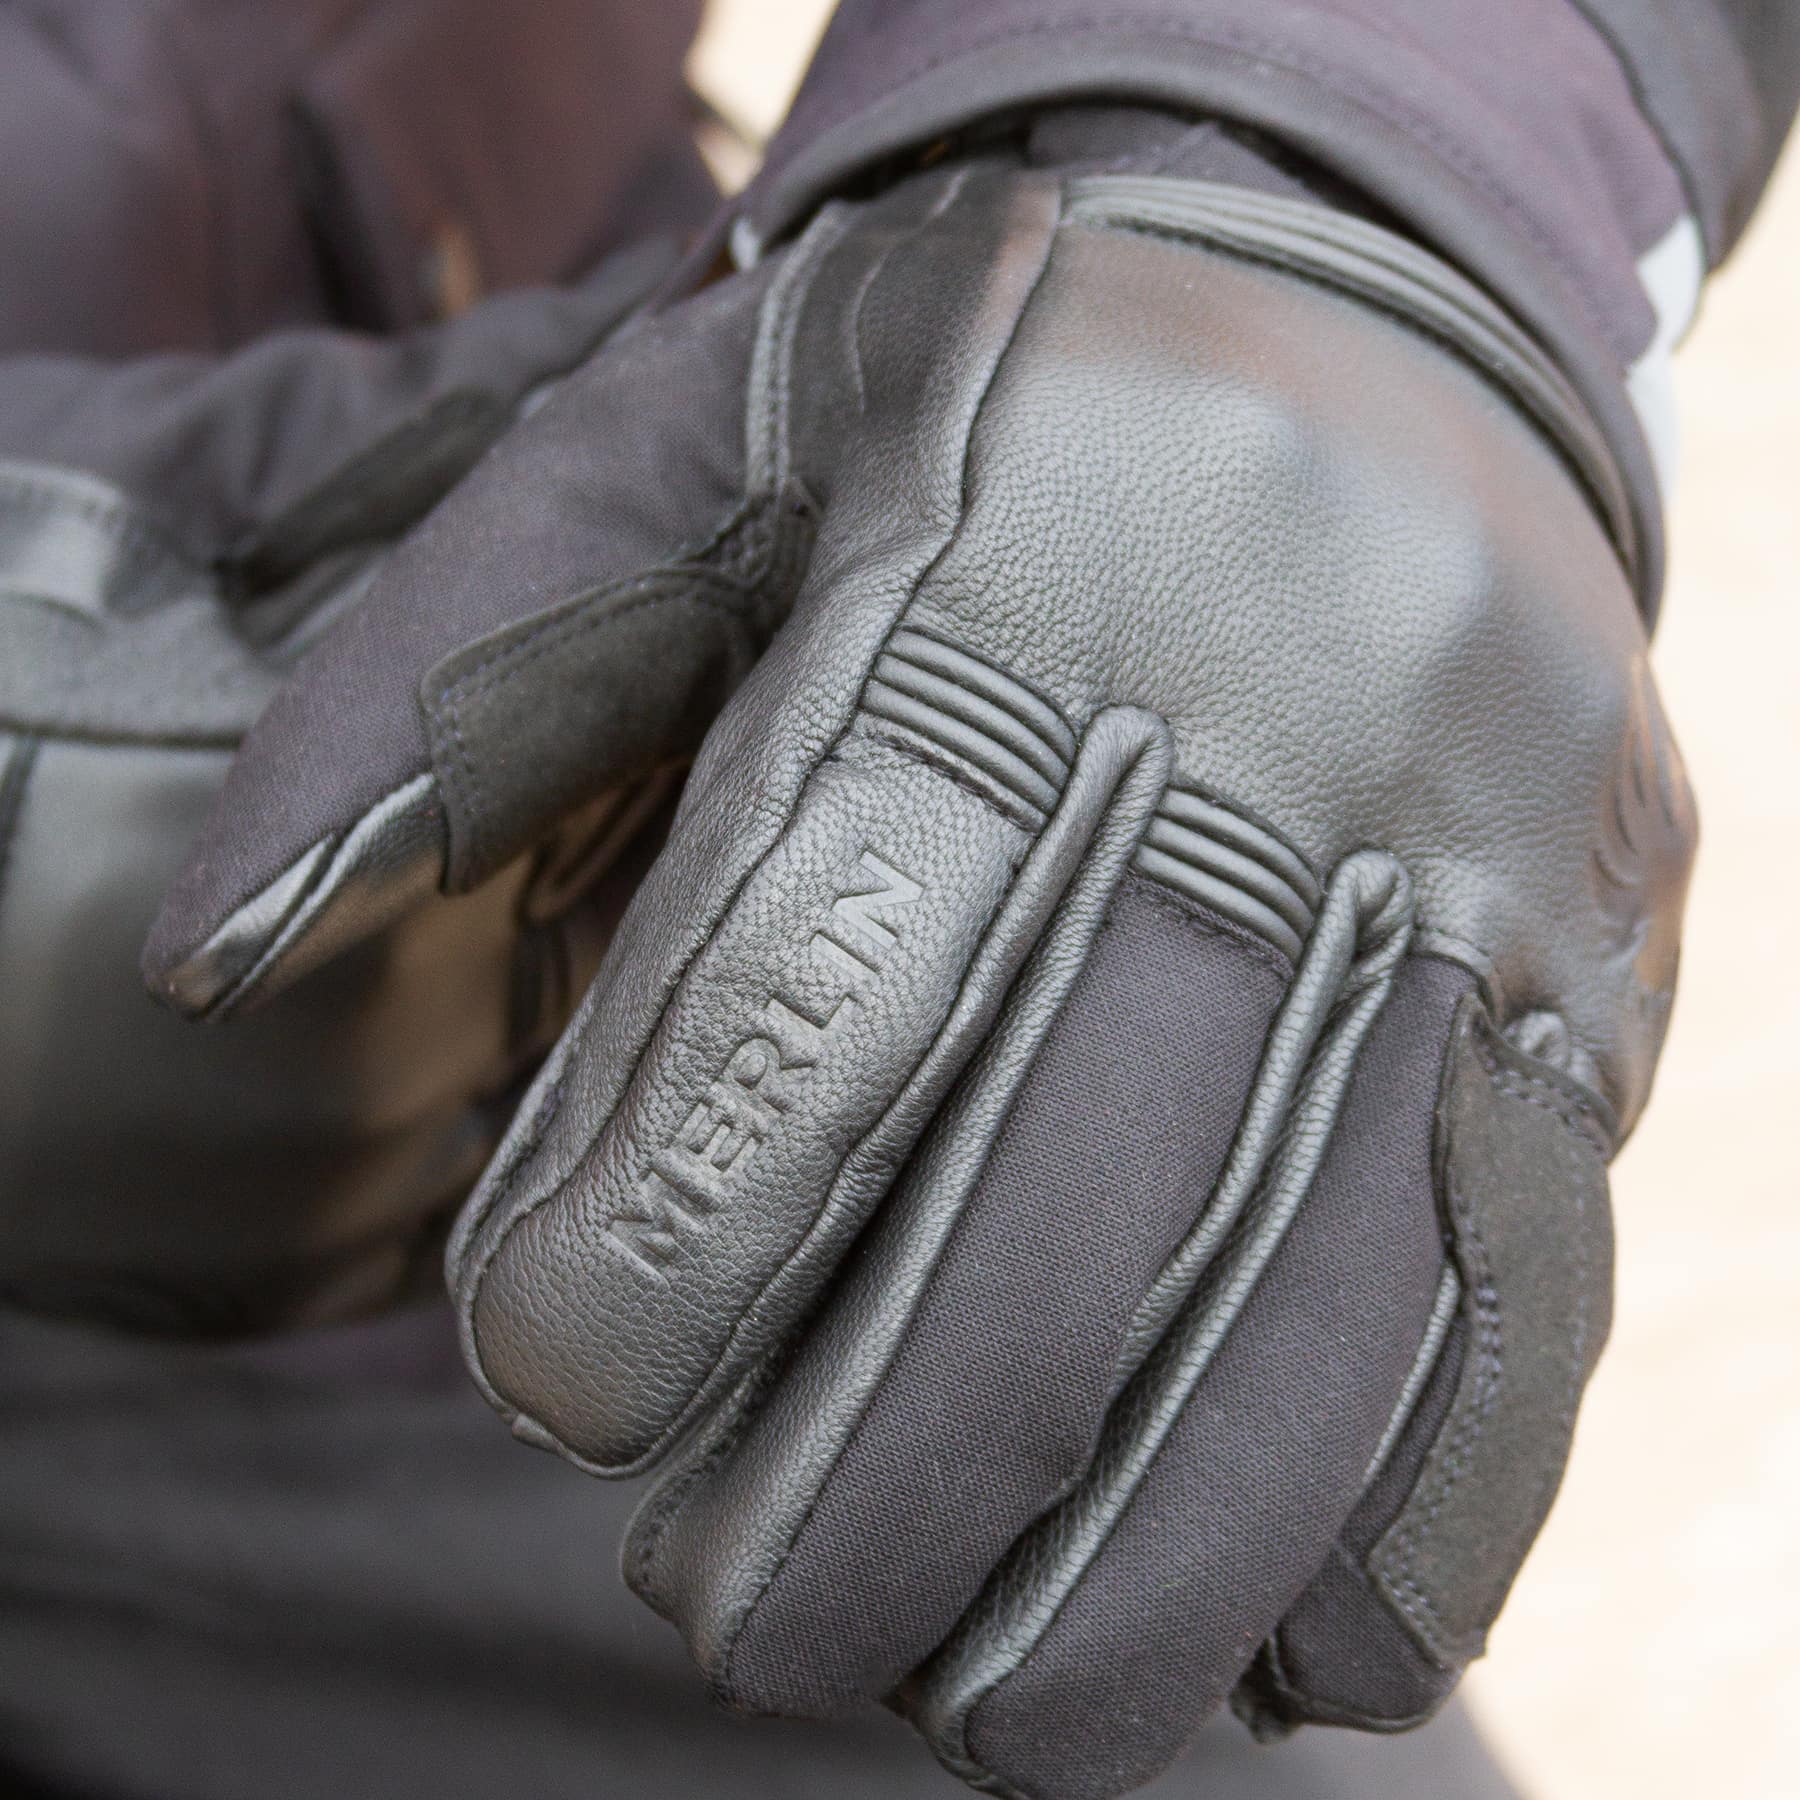 Lifestyle image of the Merlin Longdon heated gloves